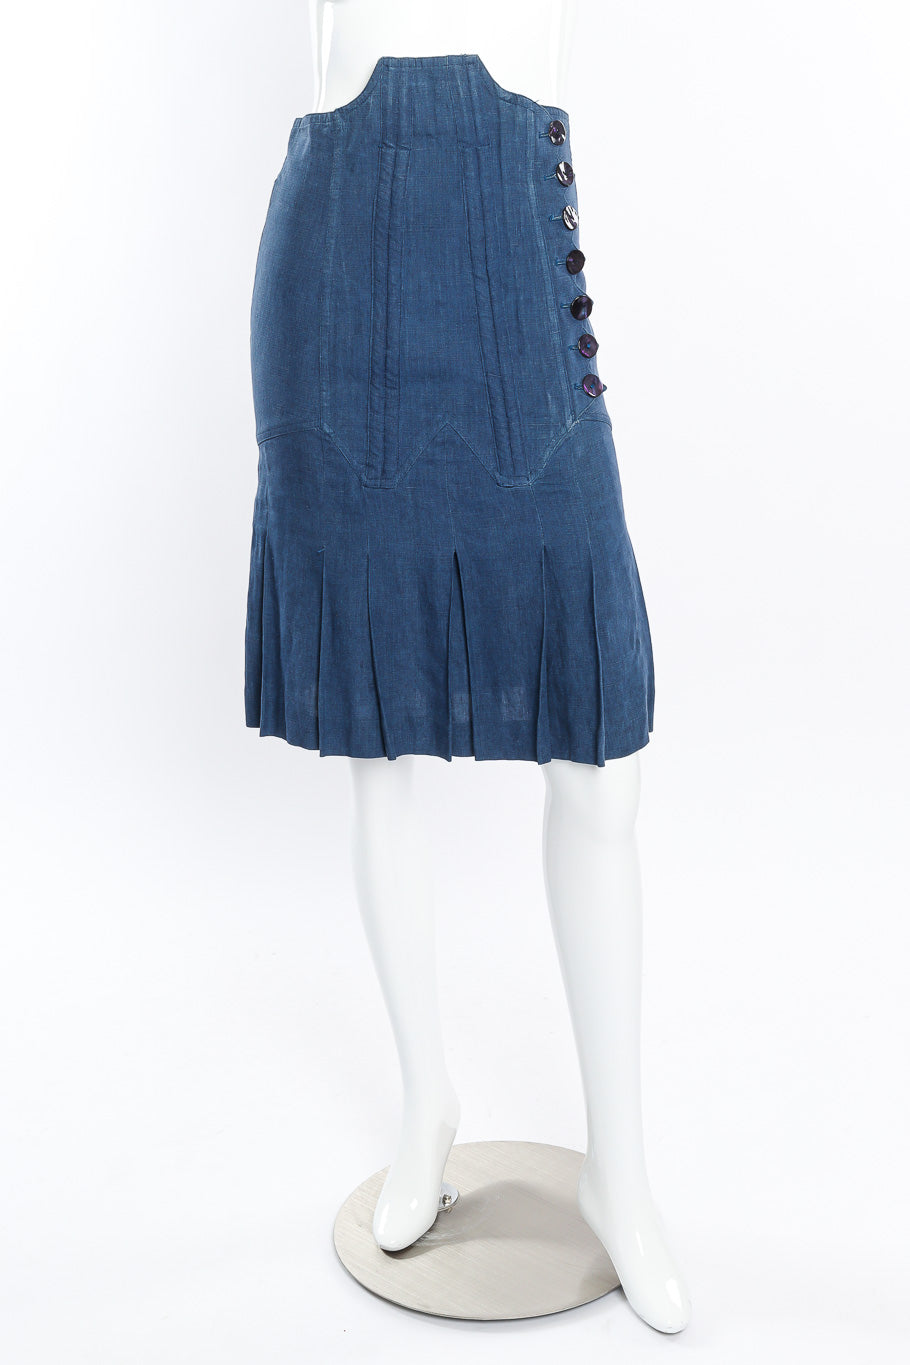 Pleated corset skirt by Jean Paul Gaultier on mannequin @recessla